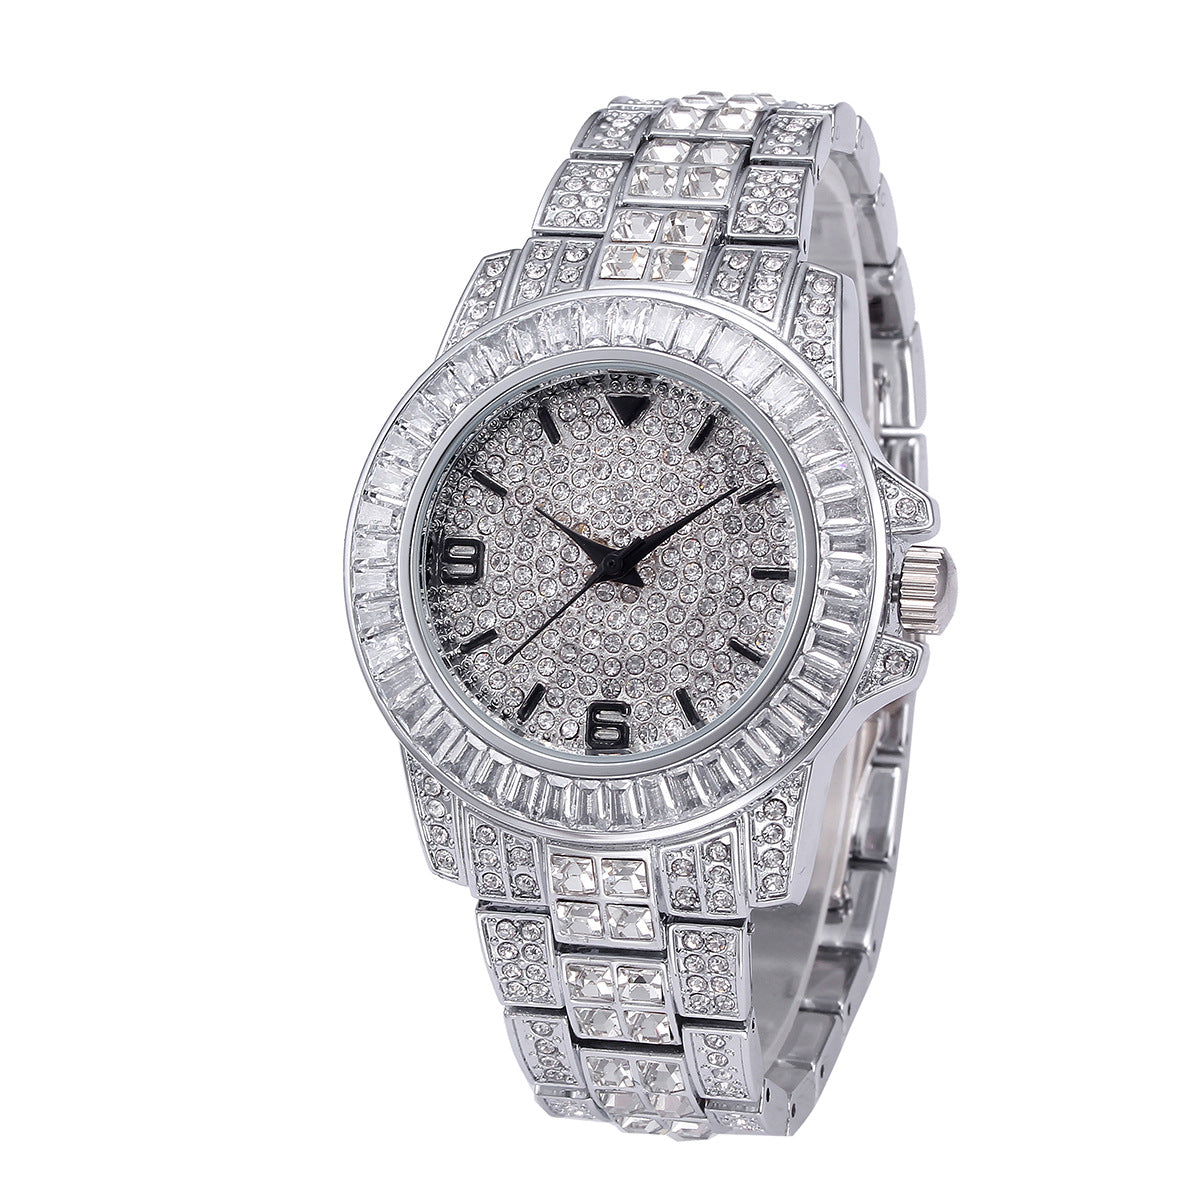 Stainless steel waterproof full diamond watch